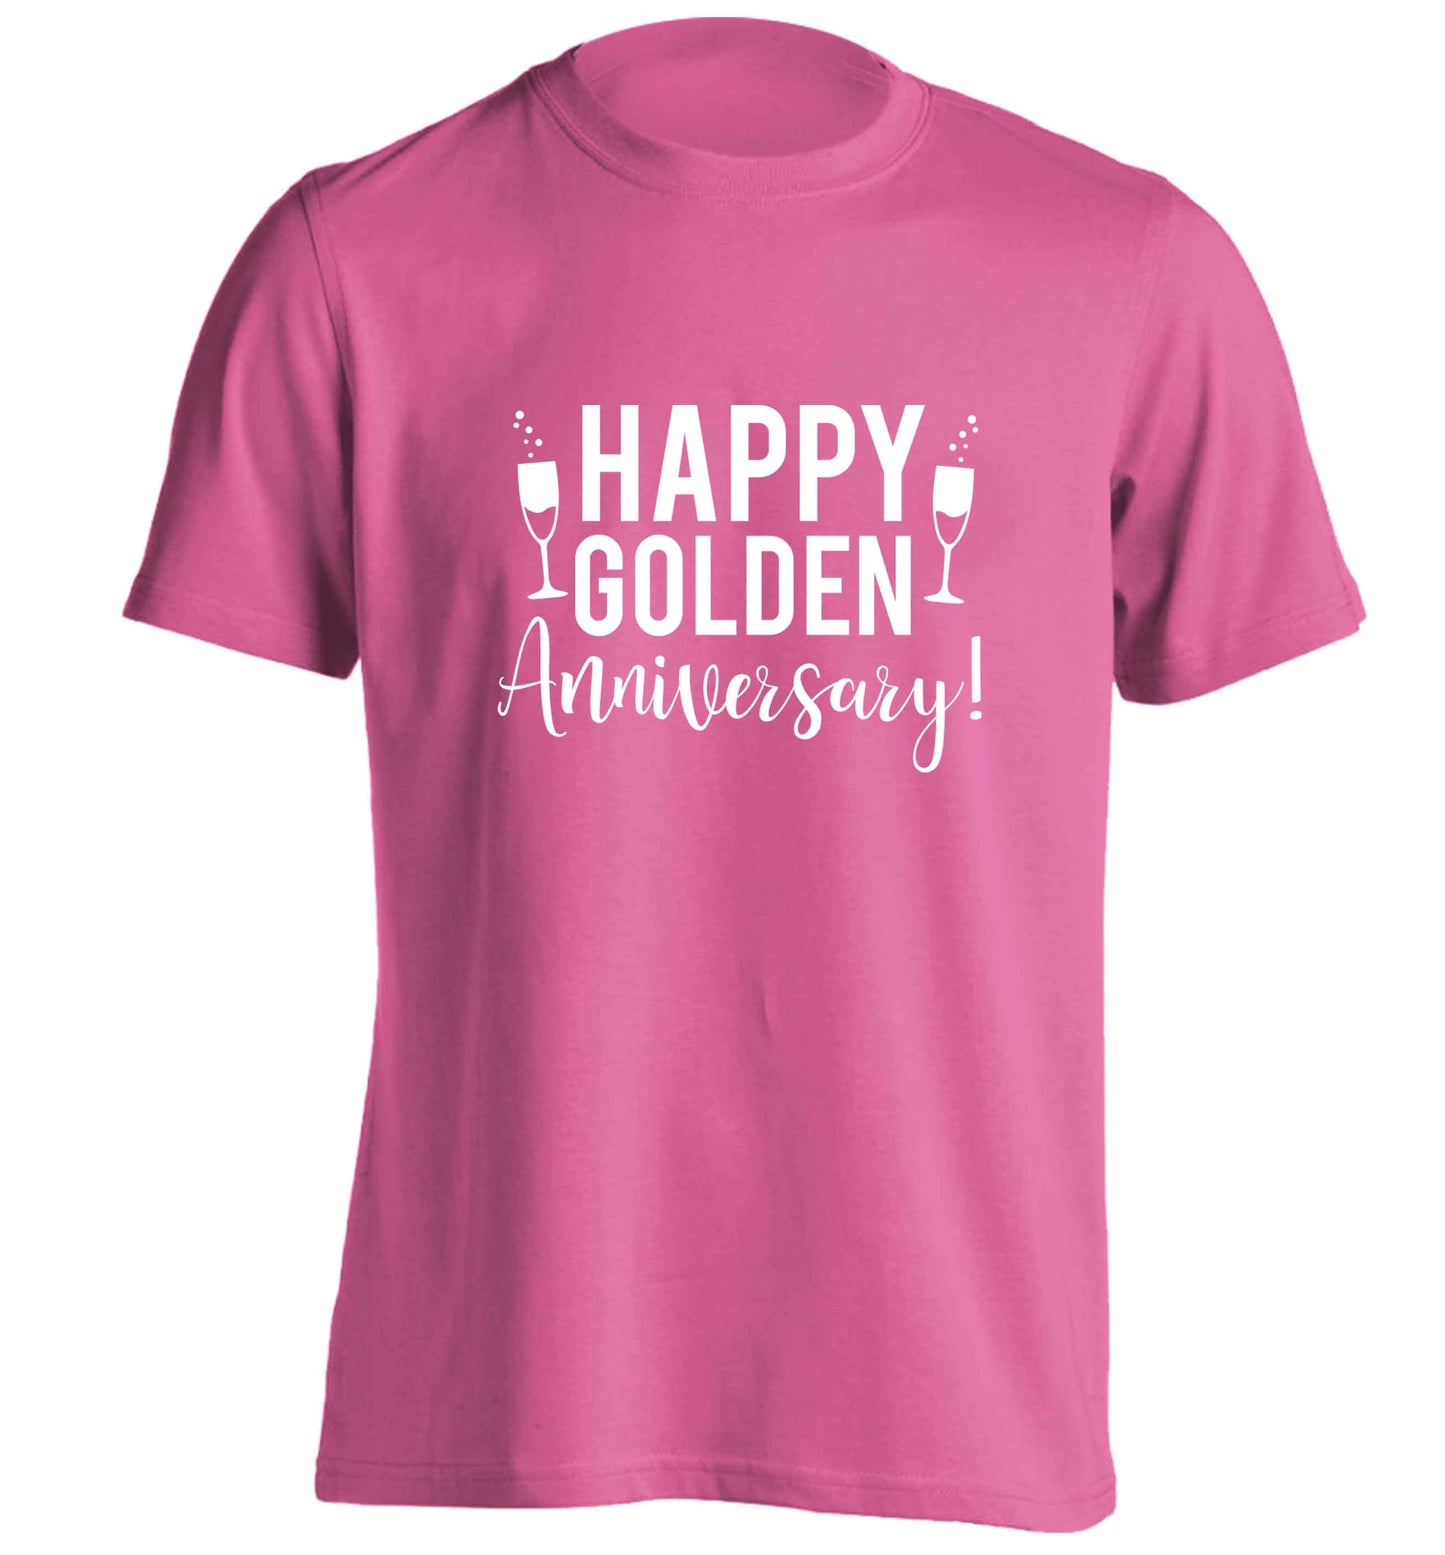 Happy golden anniversary! adults unisex pink Tshirt 2XL